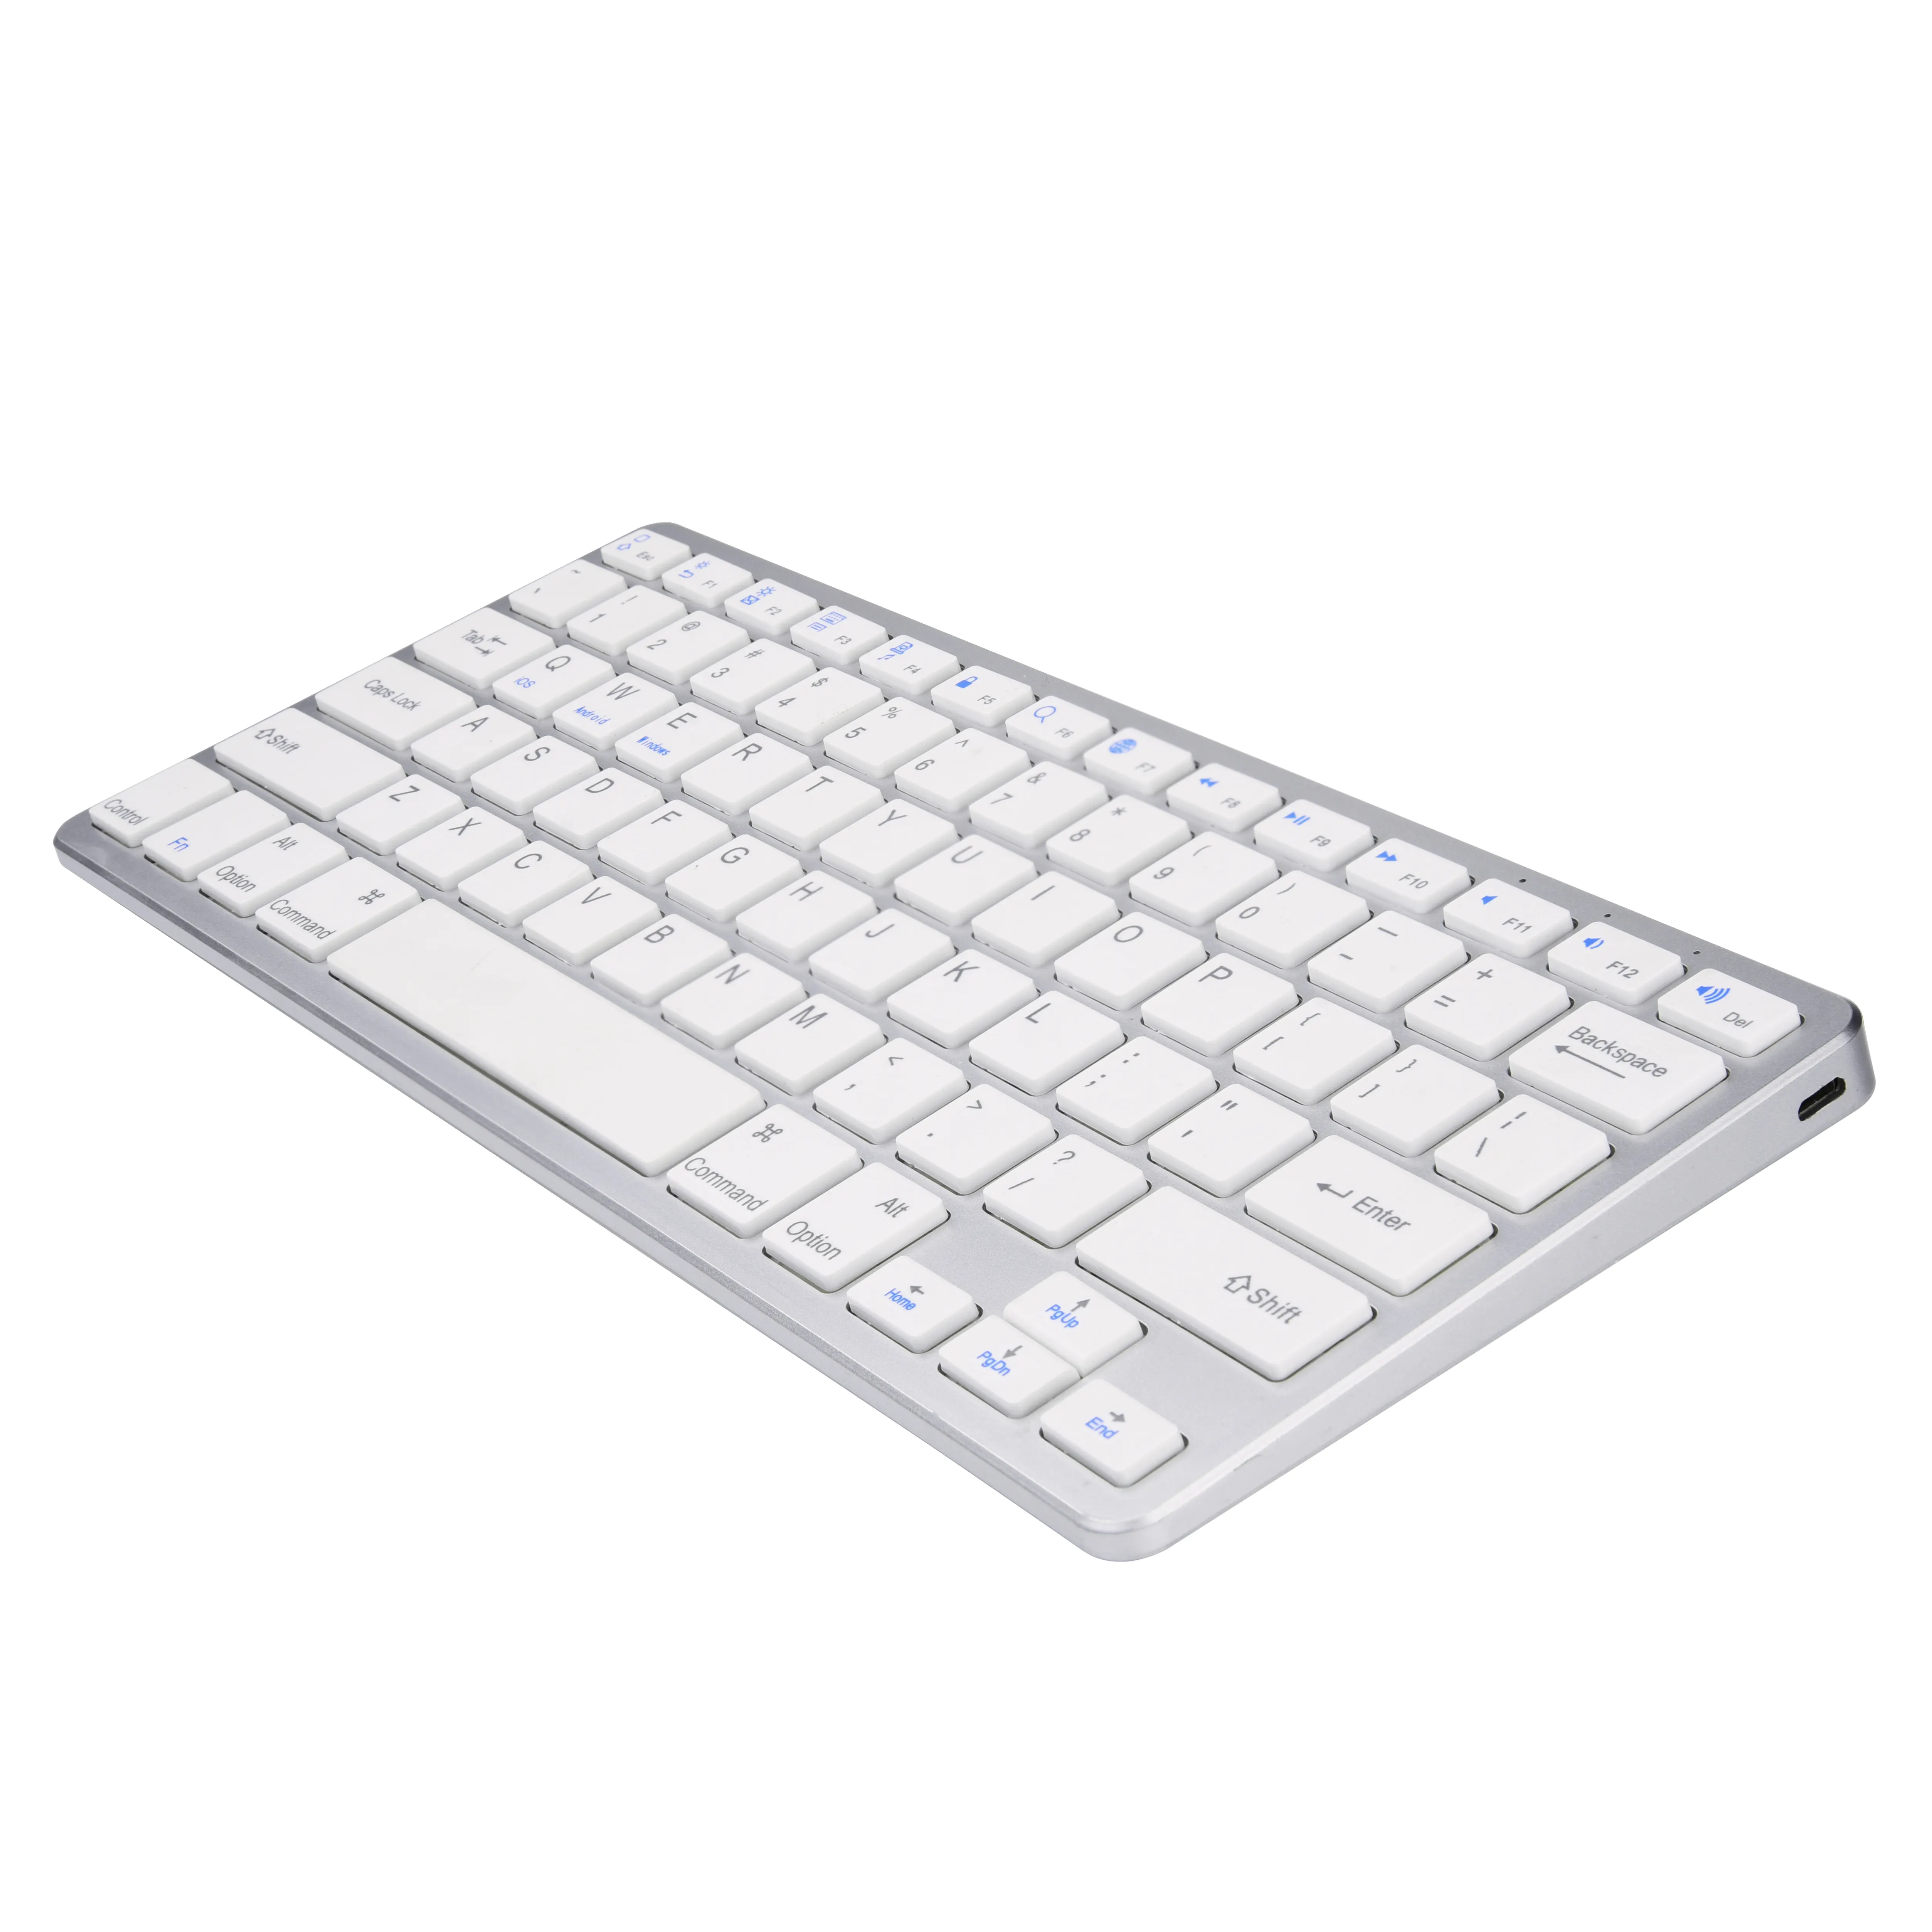 China factory Price portable Mini 78 Keys wireless keyboard Scissors Foot for IOS Windows Mac home Laptops office